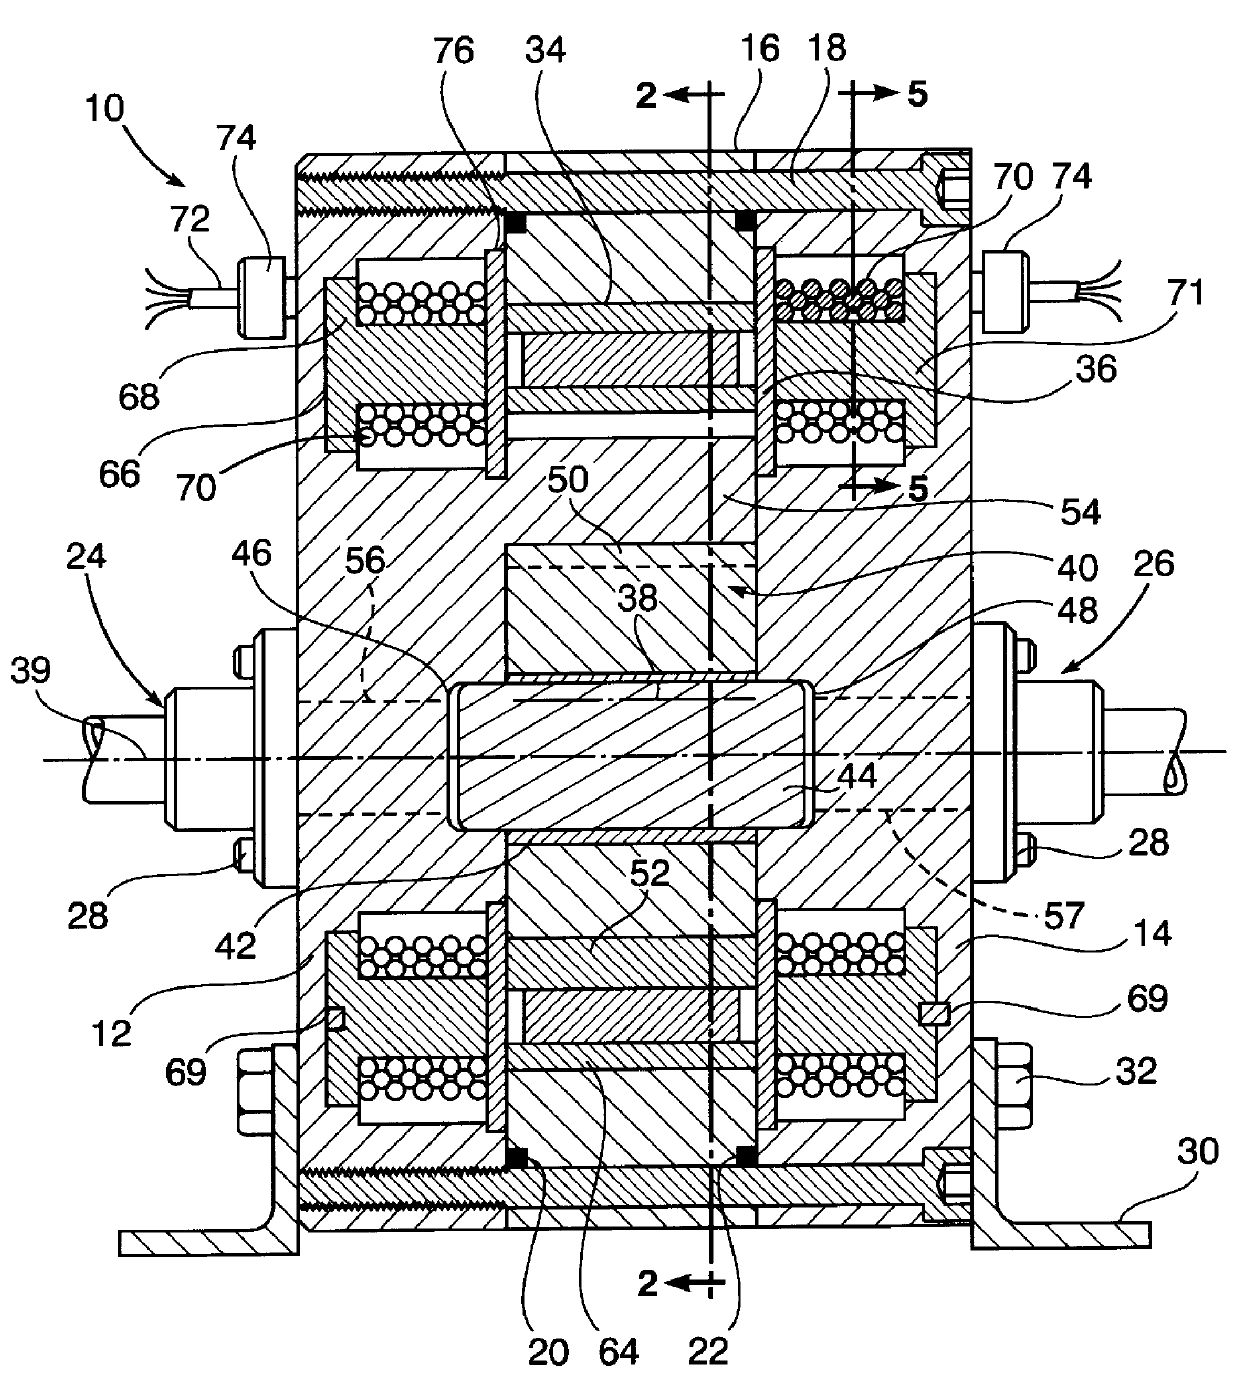 Integrated motor/gear pump